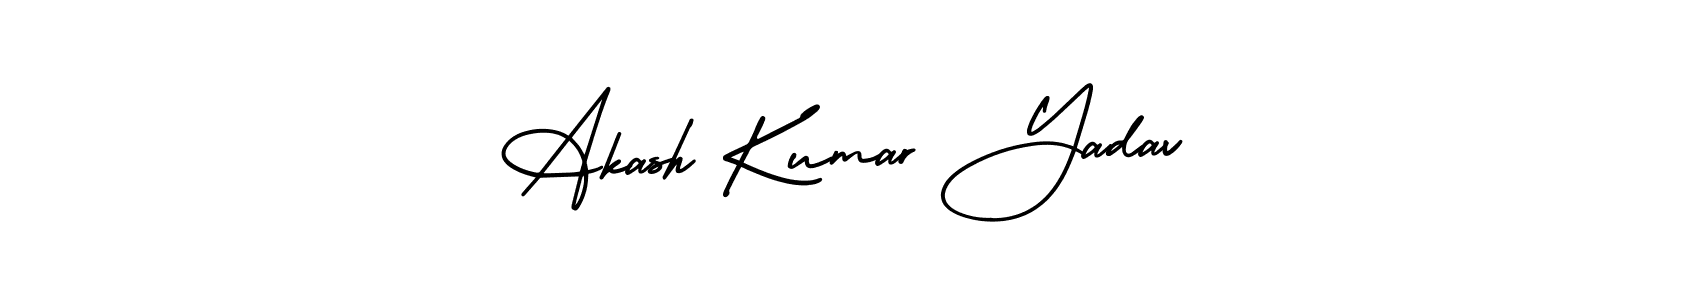 How to Draw Akash Kumar Yadav signature style? AmerikaSignatureDemo-Regular is a latest design signature styles for name Akash Kumar Yadav. Akash Kumar Yadav signature style 3 images and pictures png